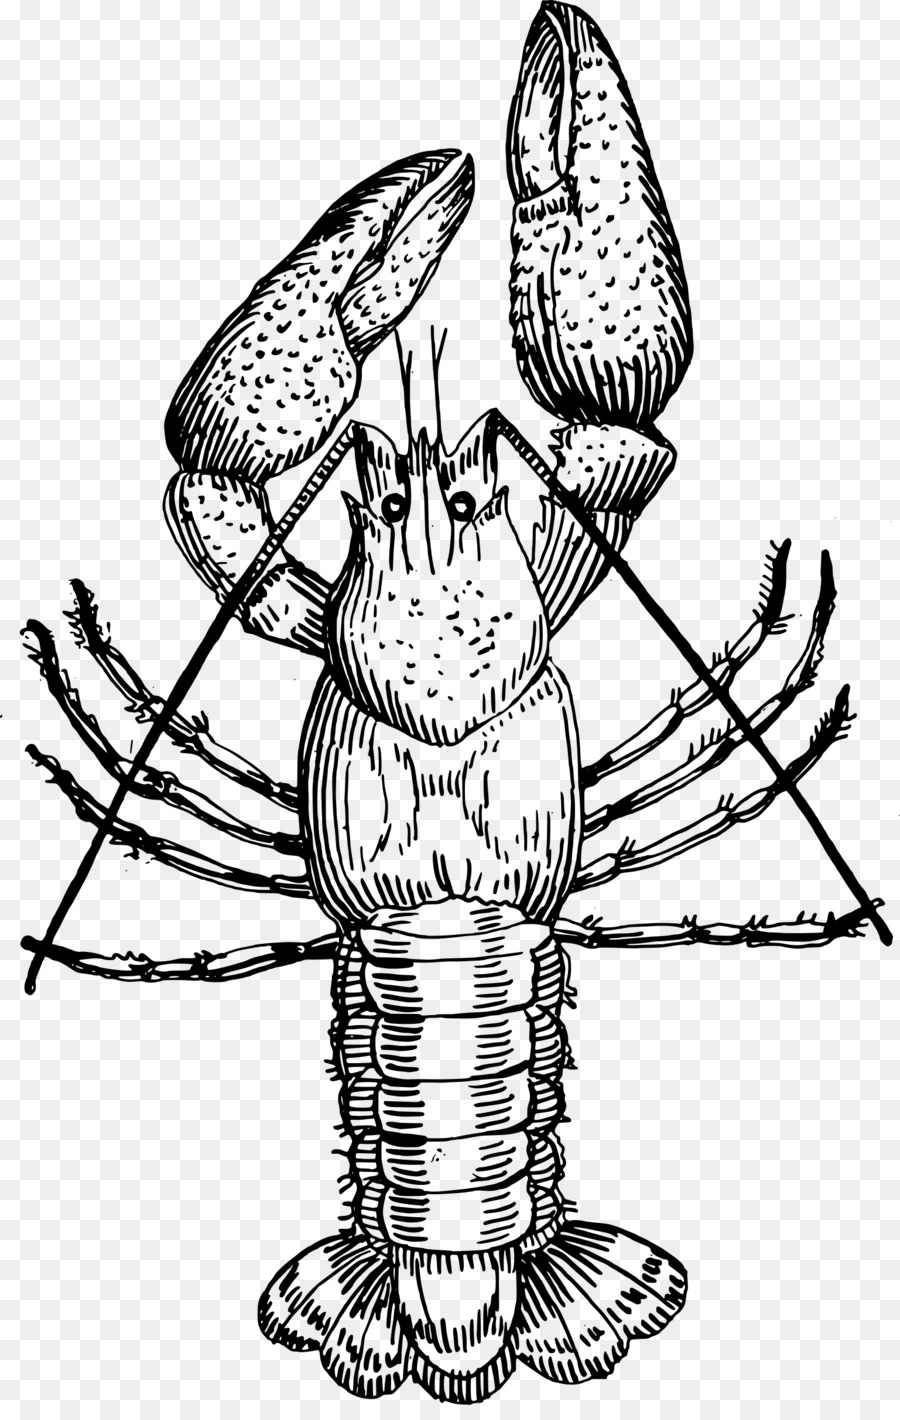 Crayfish Drawing Louisiana crawfish Clip art - crawfish png download - 1537*2400 - Free Transparent Crayfish png Download.